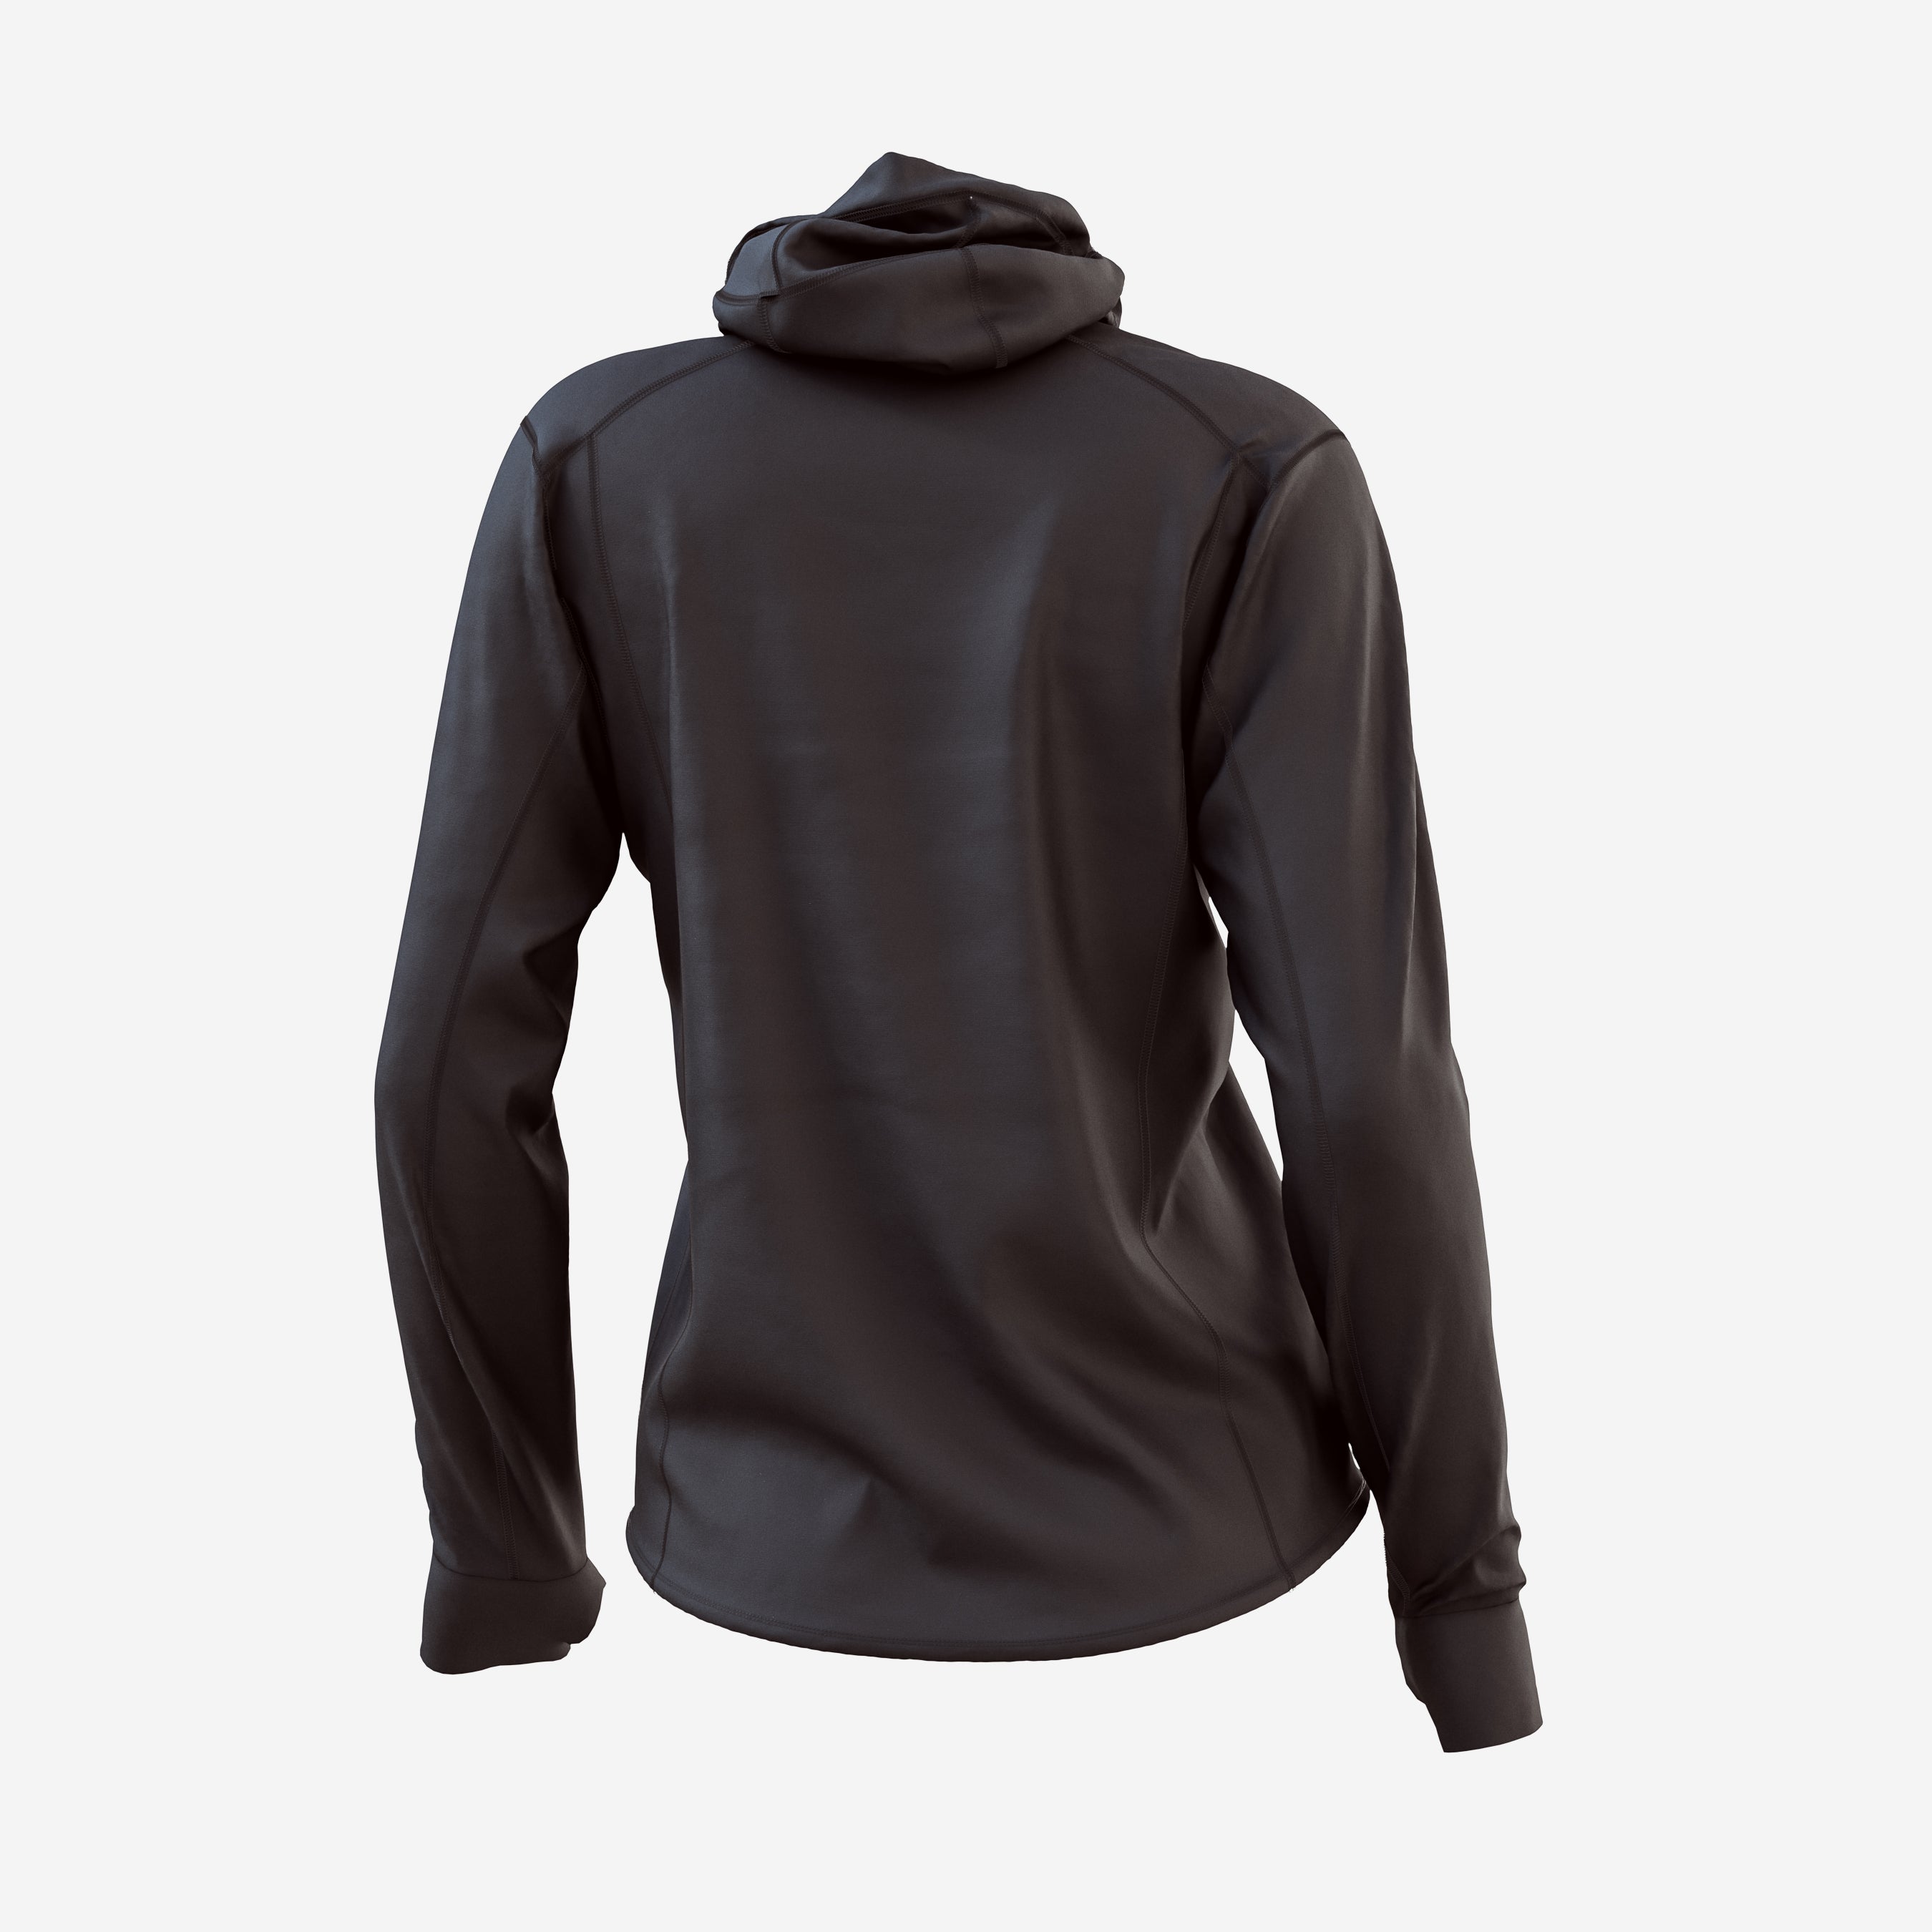 Upside Down Logo Sweatshirt in Black – SVRN